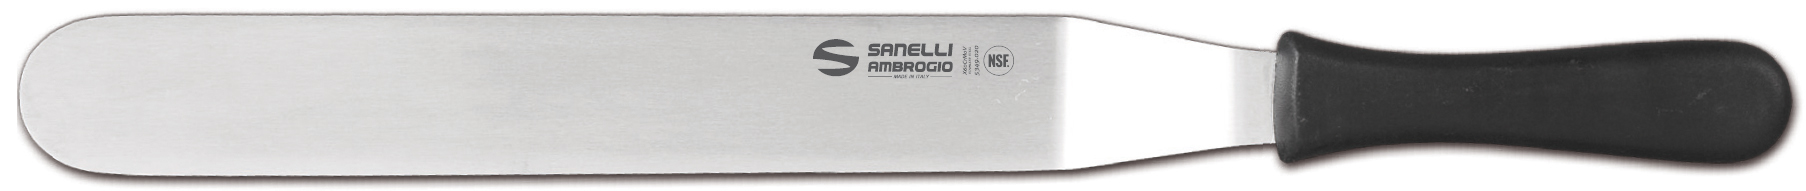 S780.030 SUPRA ANGULAR CHEF'S SPATULA 30CM SANELLI AMBROGIO